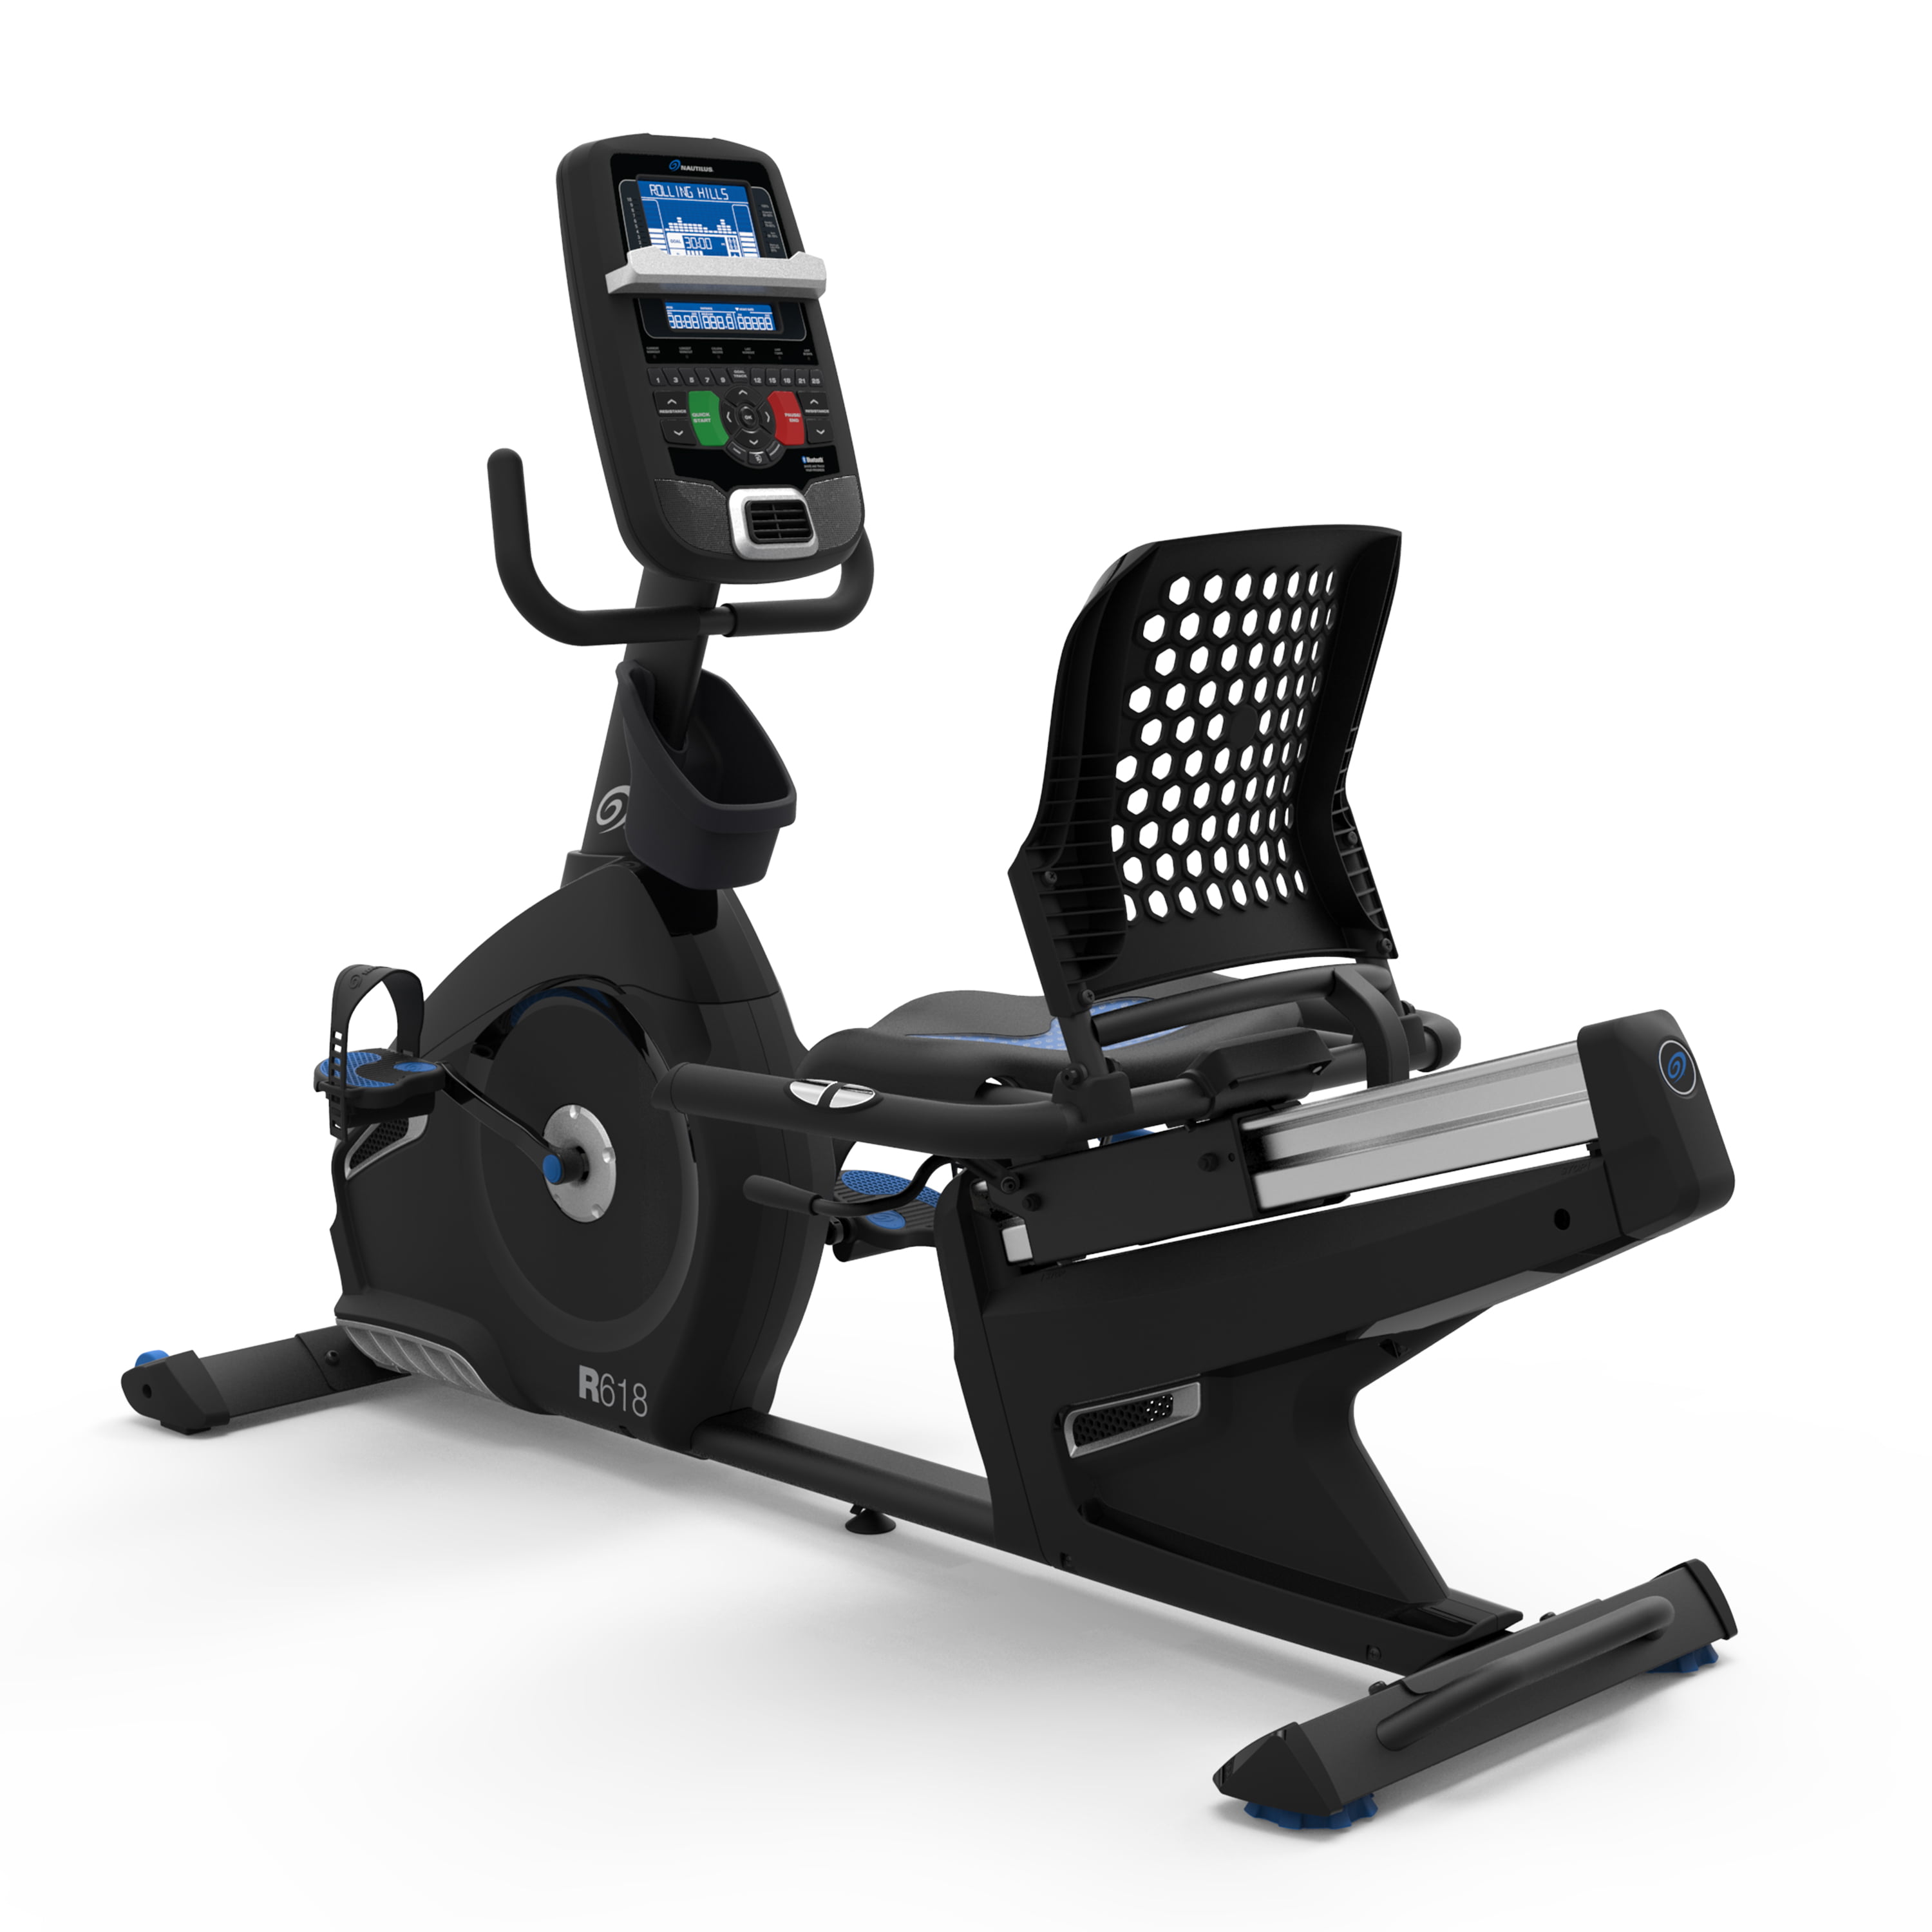 Nautilus R618 Recumbent Stationary Home Gym Cardio Cycling Workout Exercise Bike 